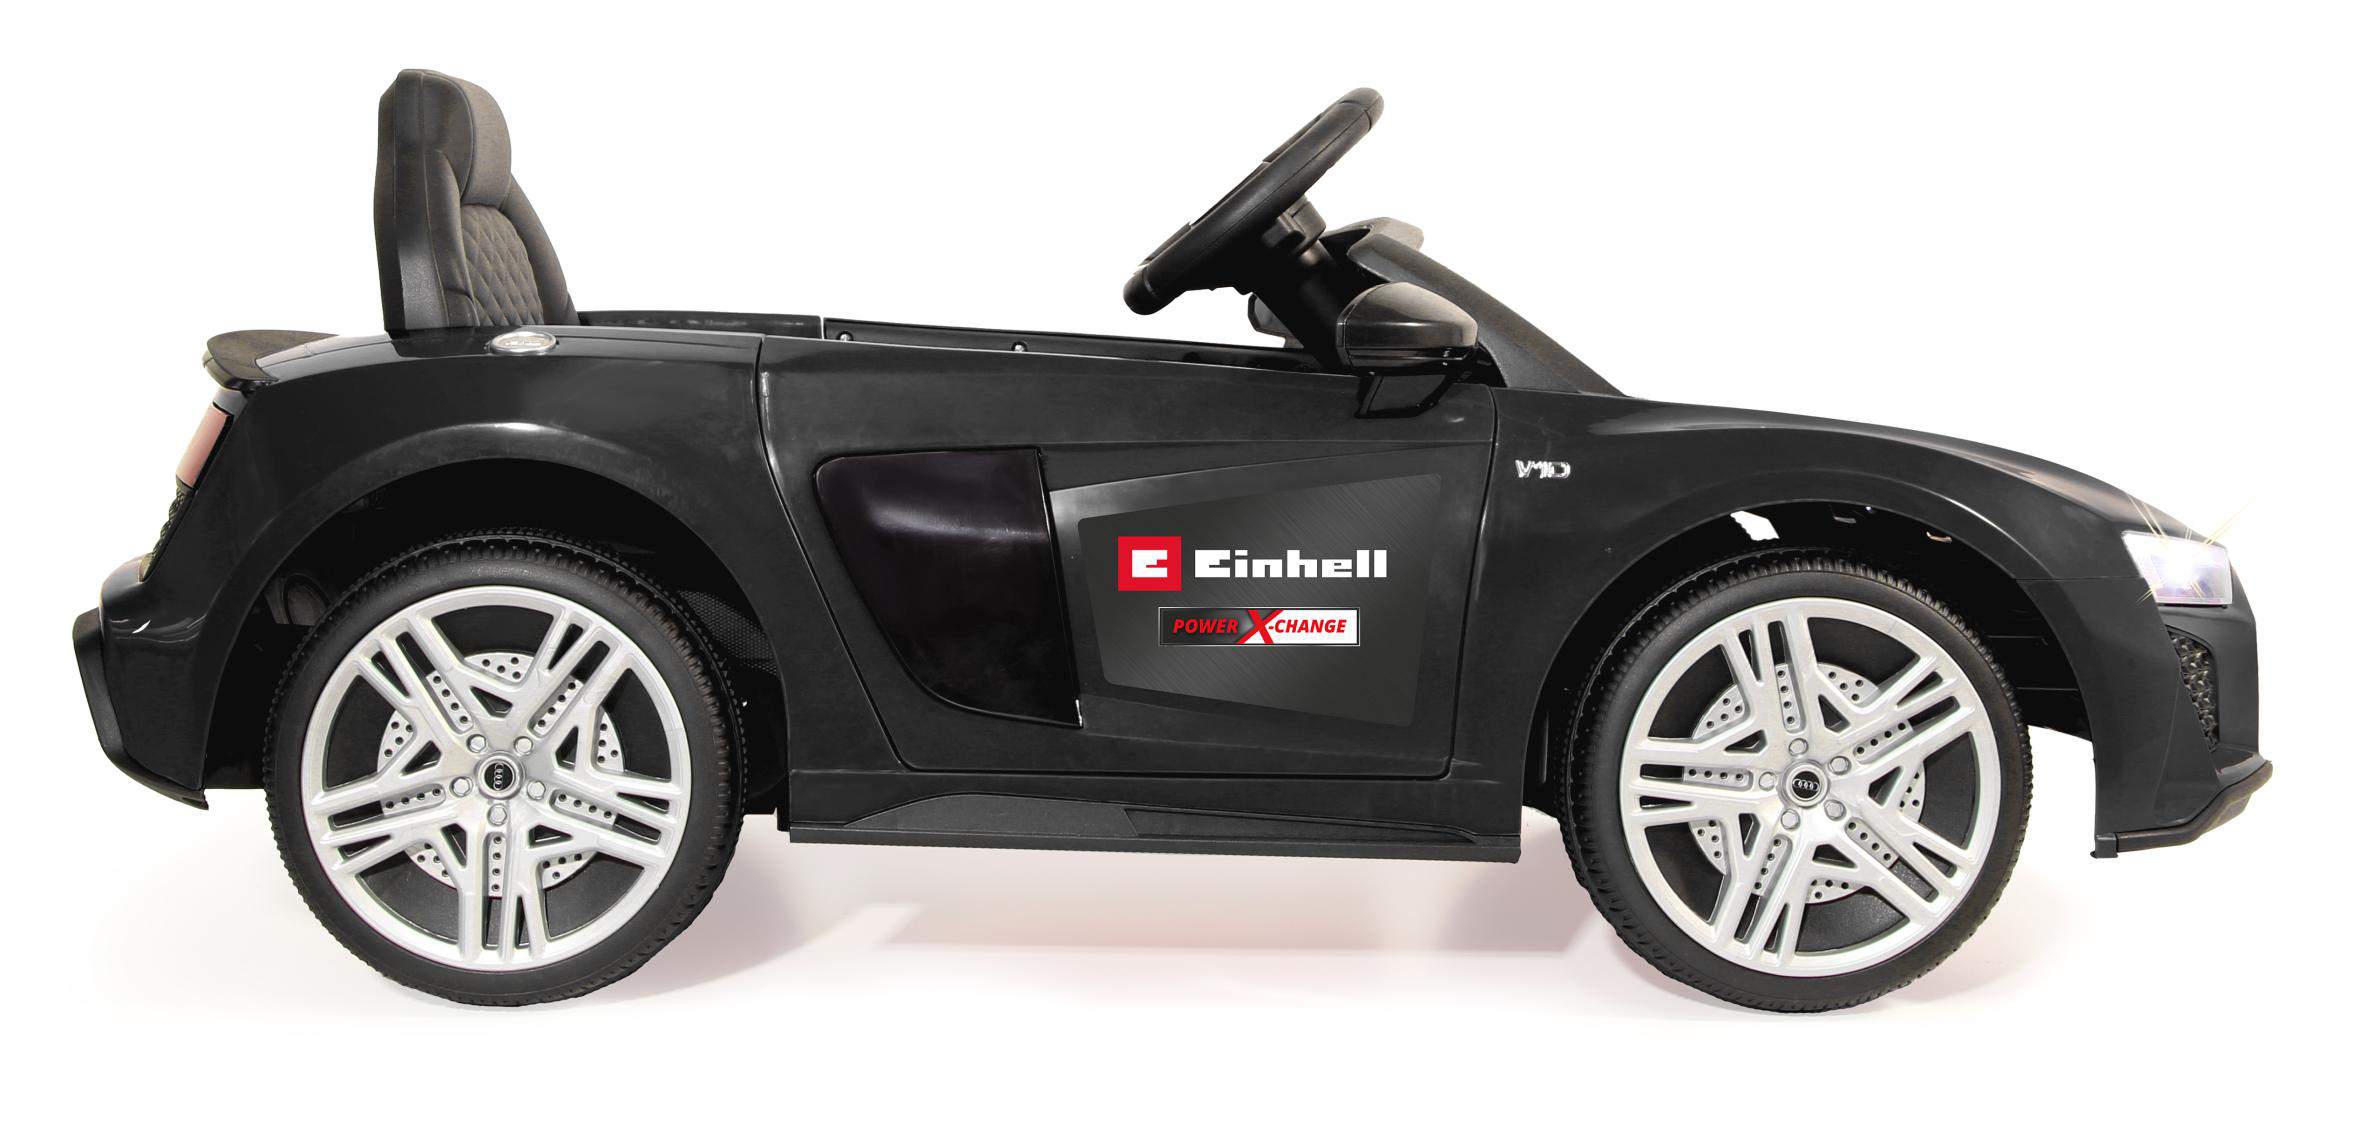 JAMARA KIDS schwarz Starter Audi Einhell 18V R8 Set inkl. Schwarz Ride-on X-Change Power Elektrofahrzeug Spyder